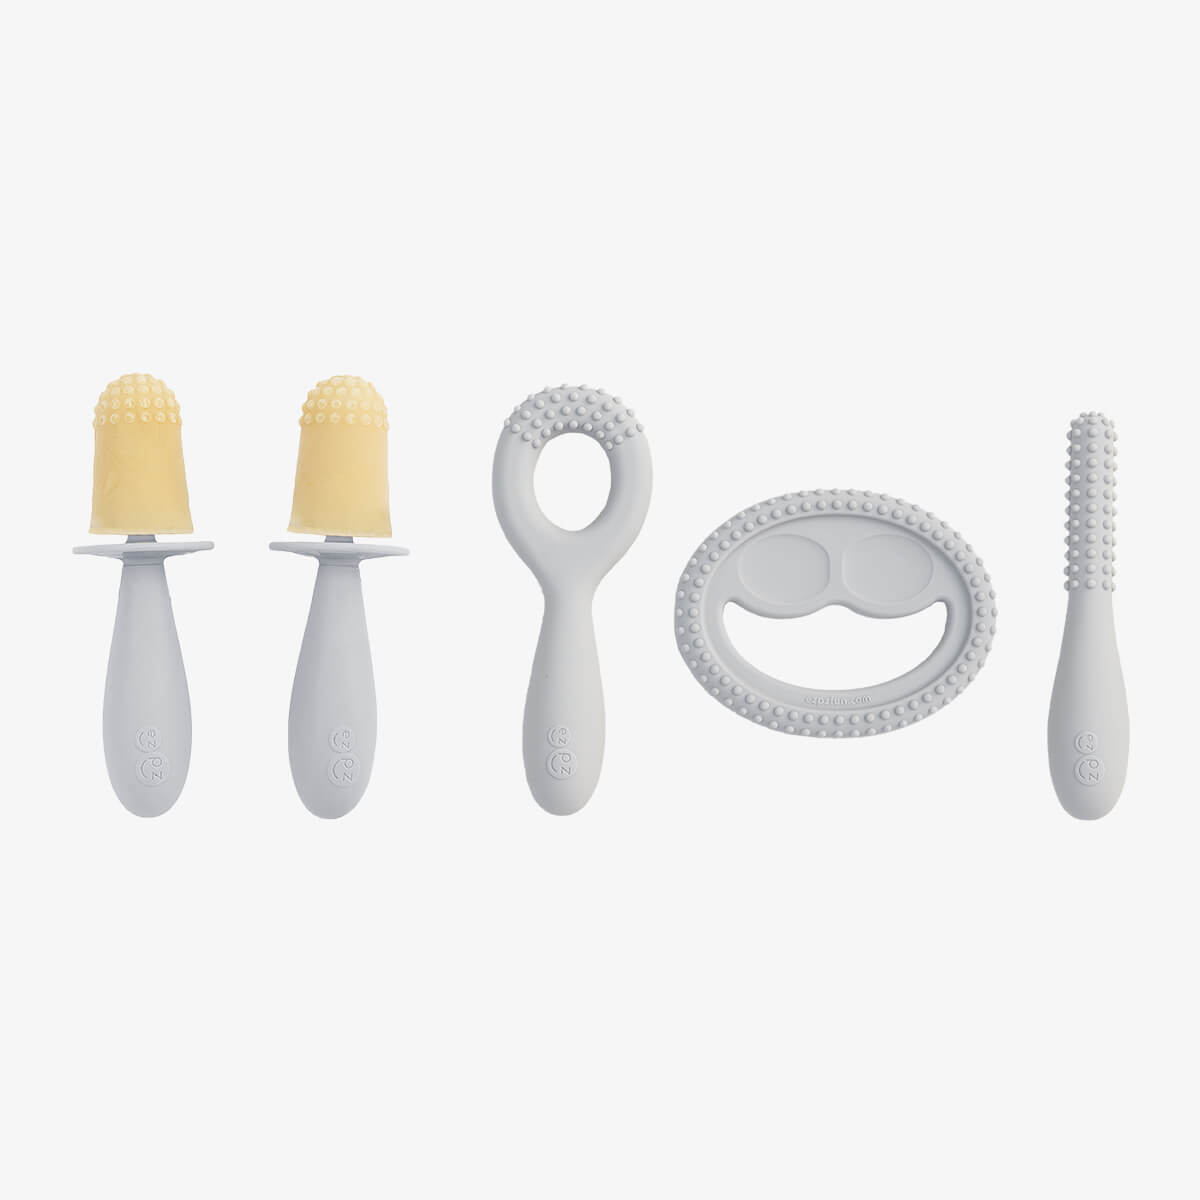  ezpz Oral Development Tools (3 Pack in Gray) - Non